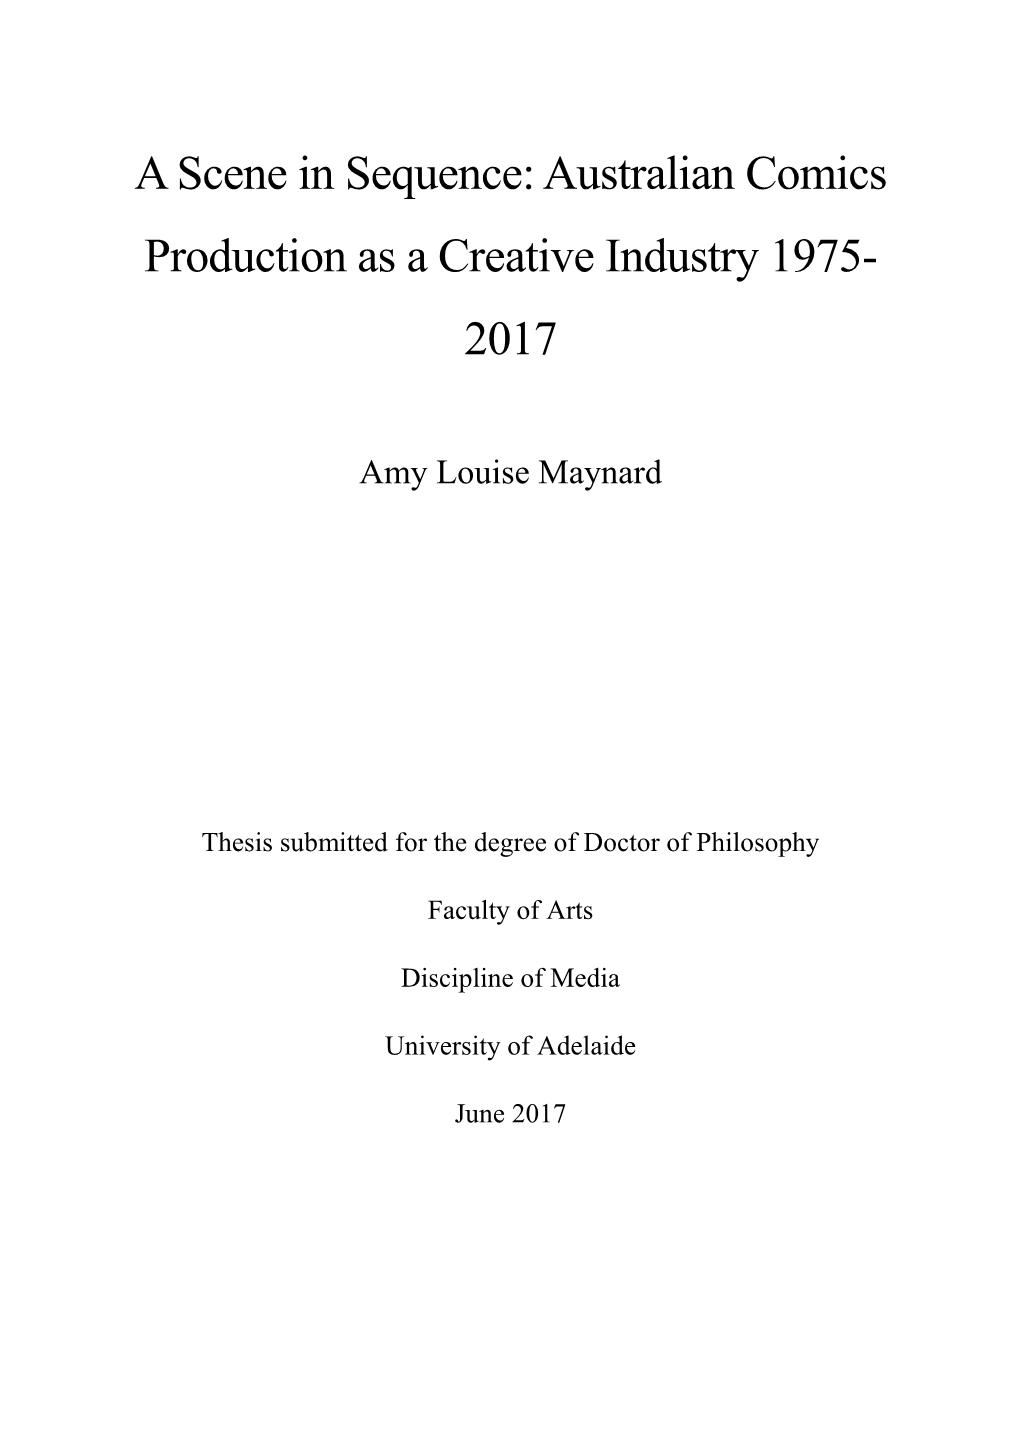 Australian Comics Production As a Creative Industry 1975-2017